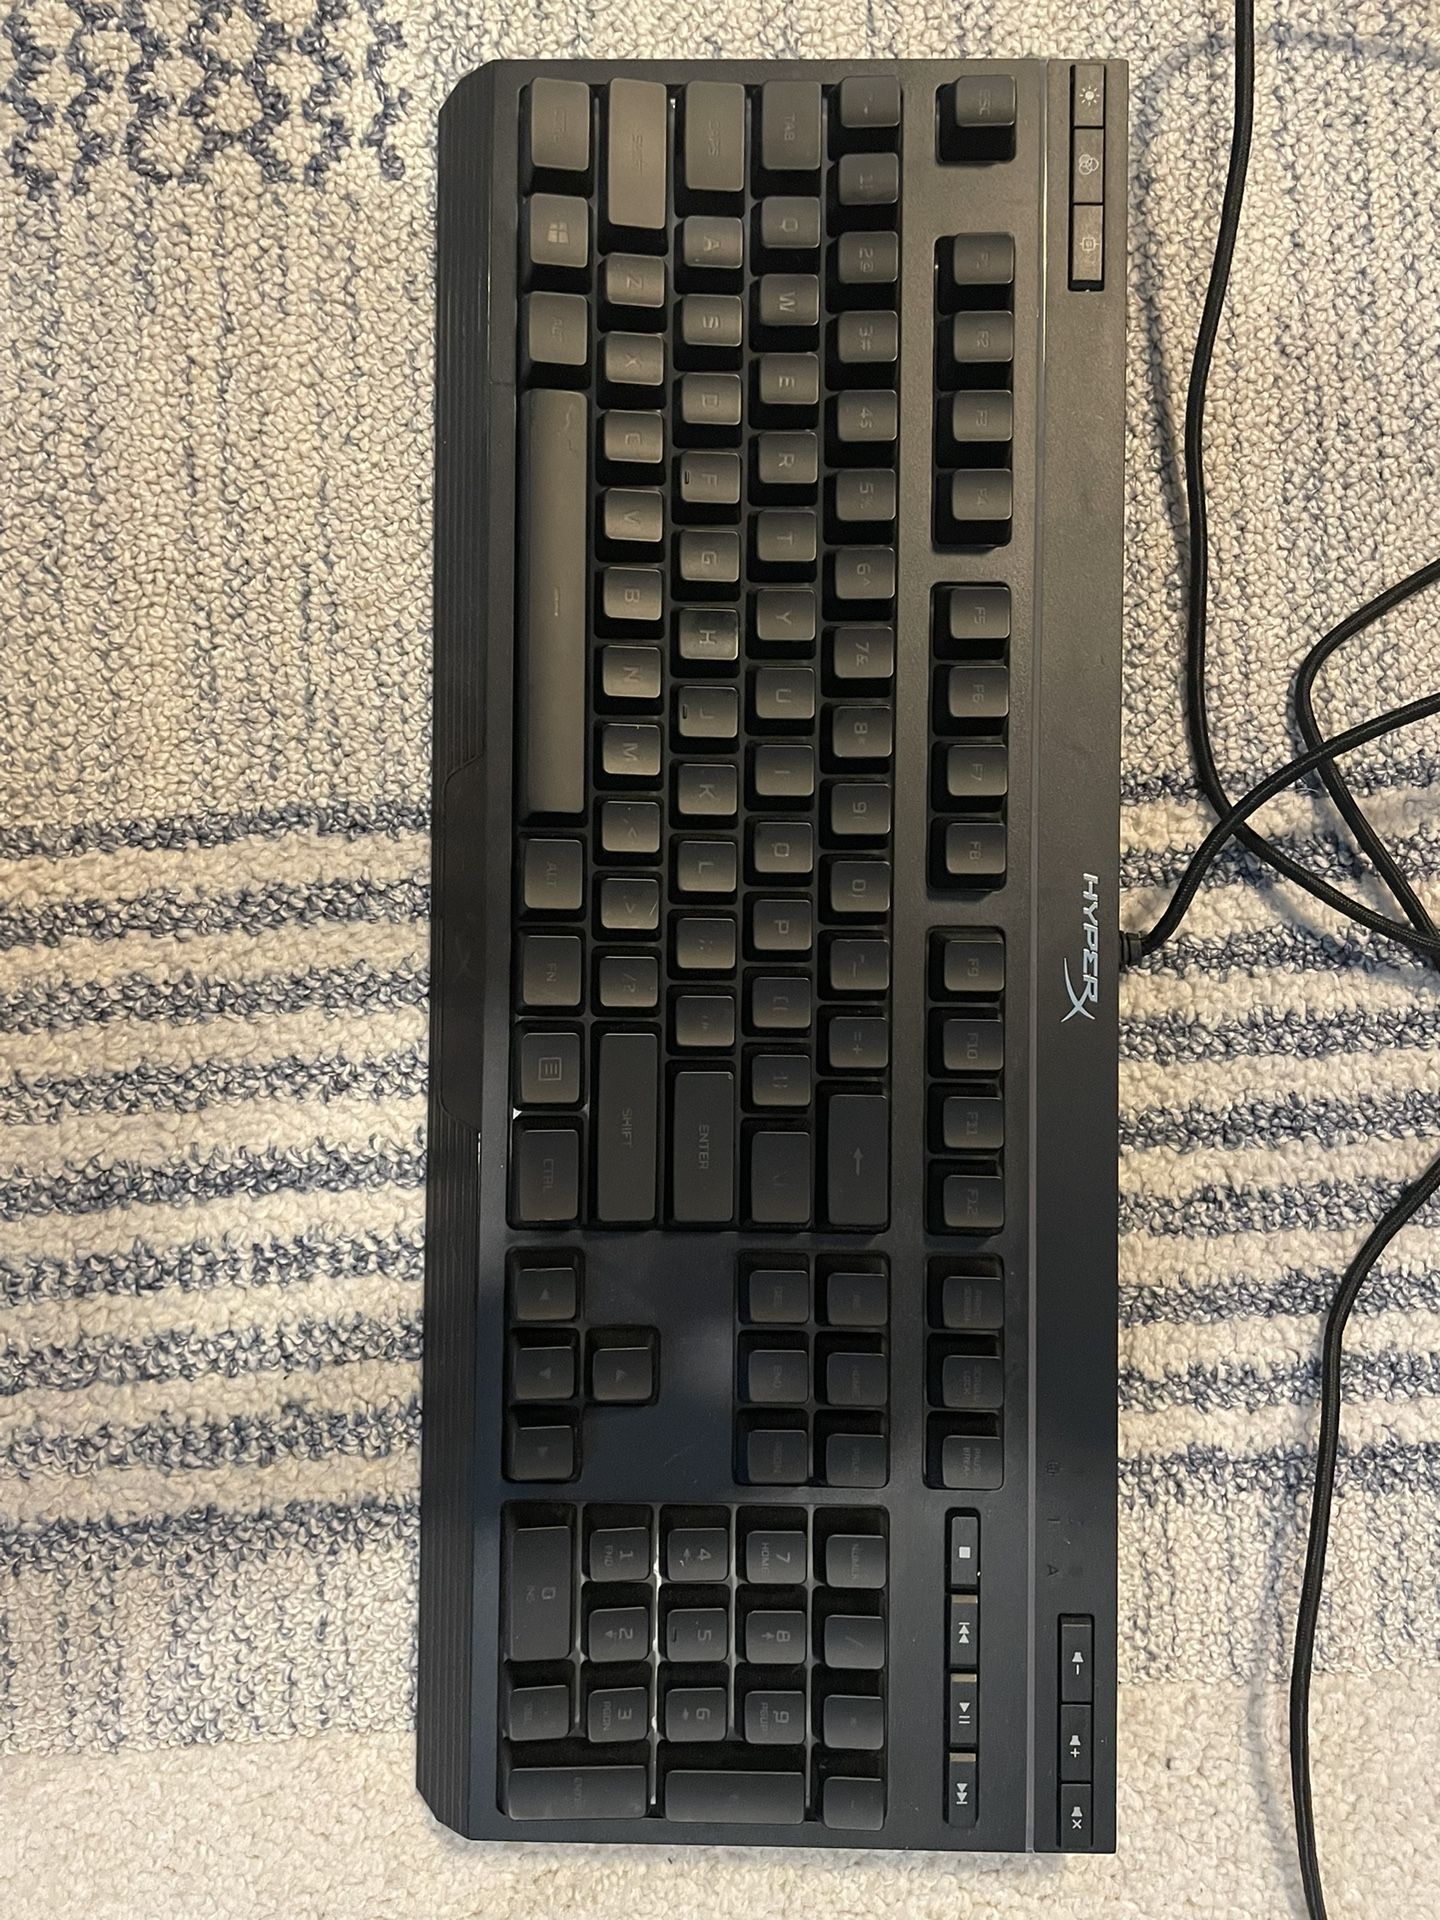 Hyper x Gaming Keyboard 